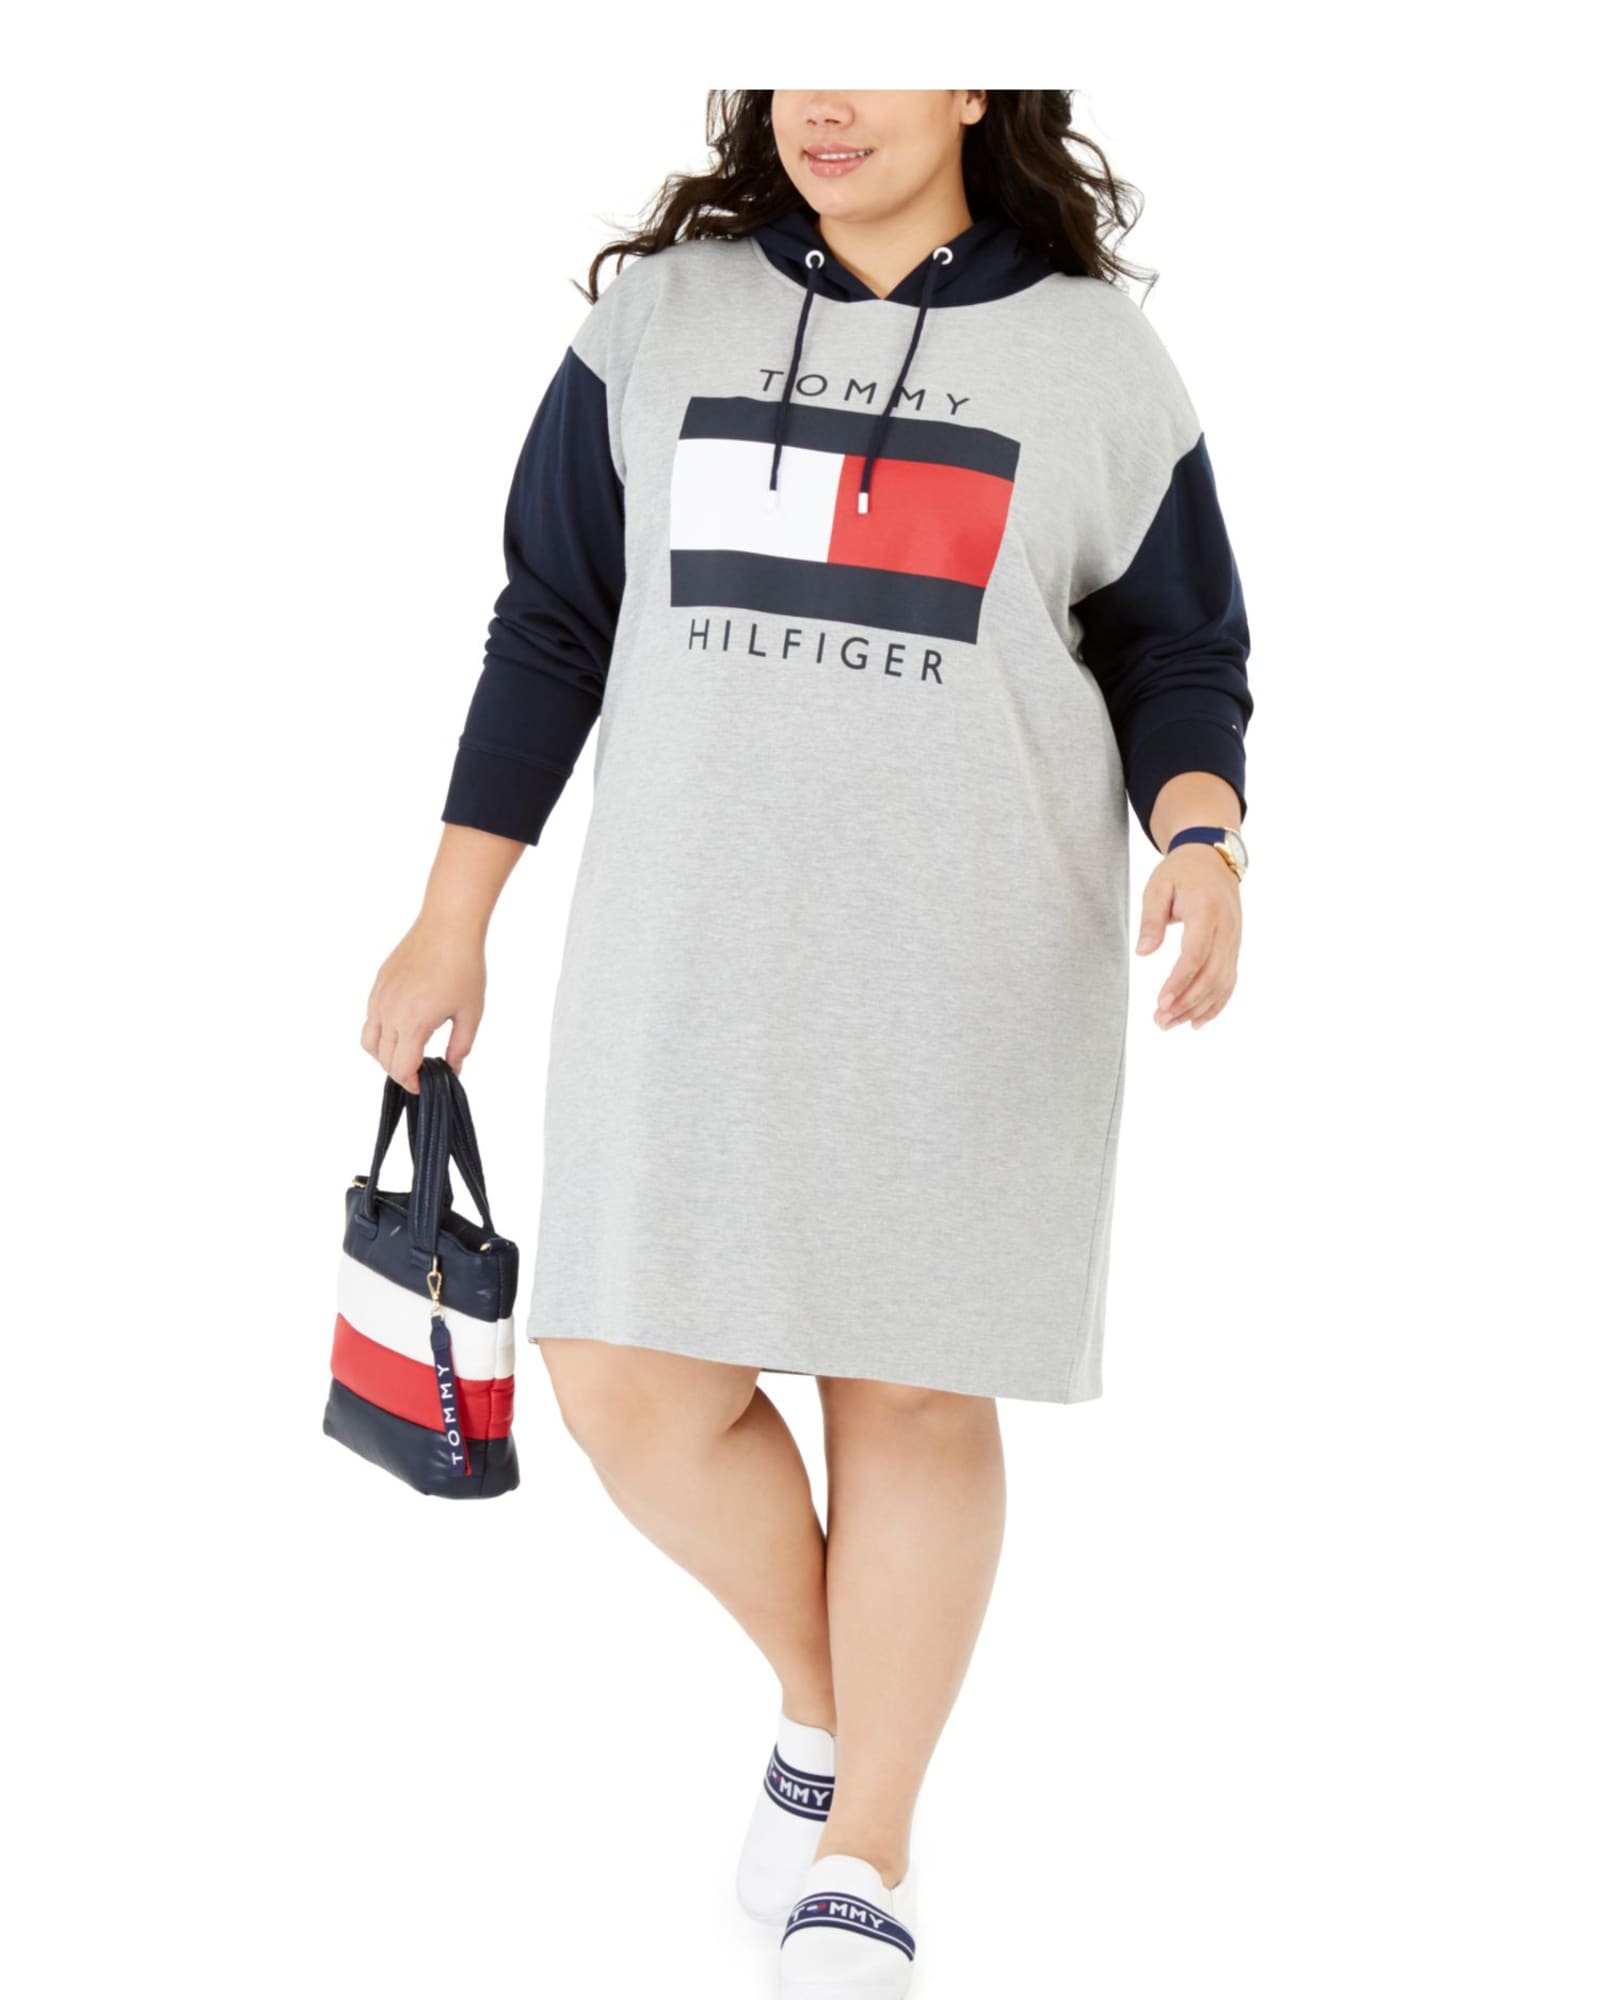 Tommy Hilfiger Women's Plus Size Colorblocked Hoodie Sweatshirt Dress Gray Size 0X | Gray